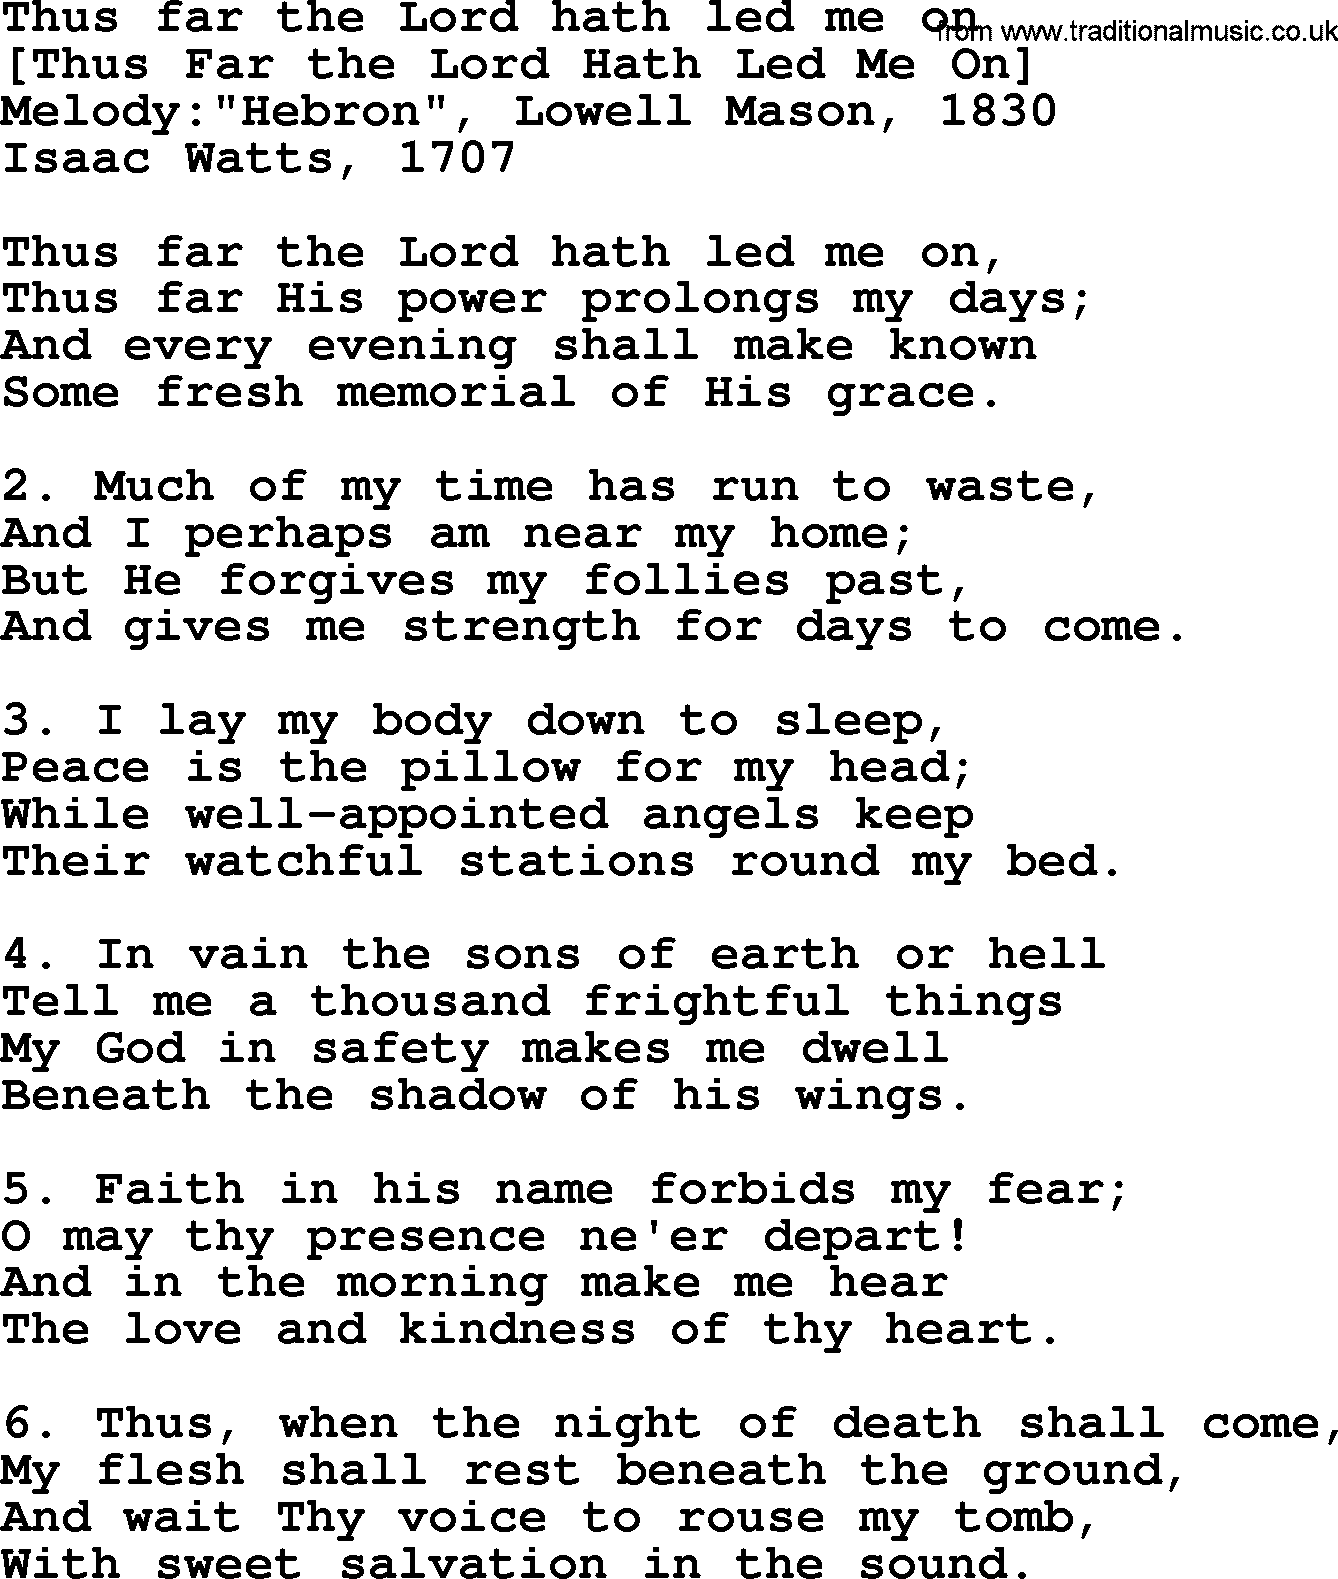 Old English Song: Thus Far The Lord Hath Led Me On lyrics